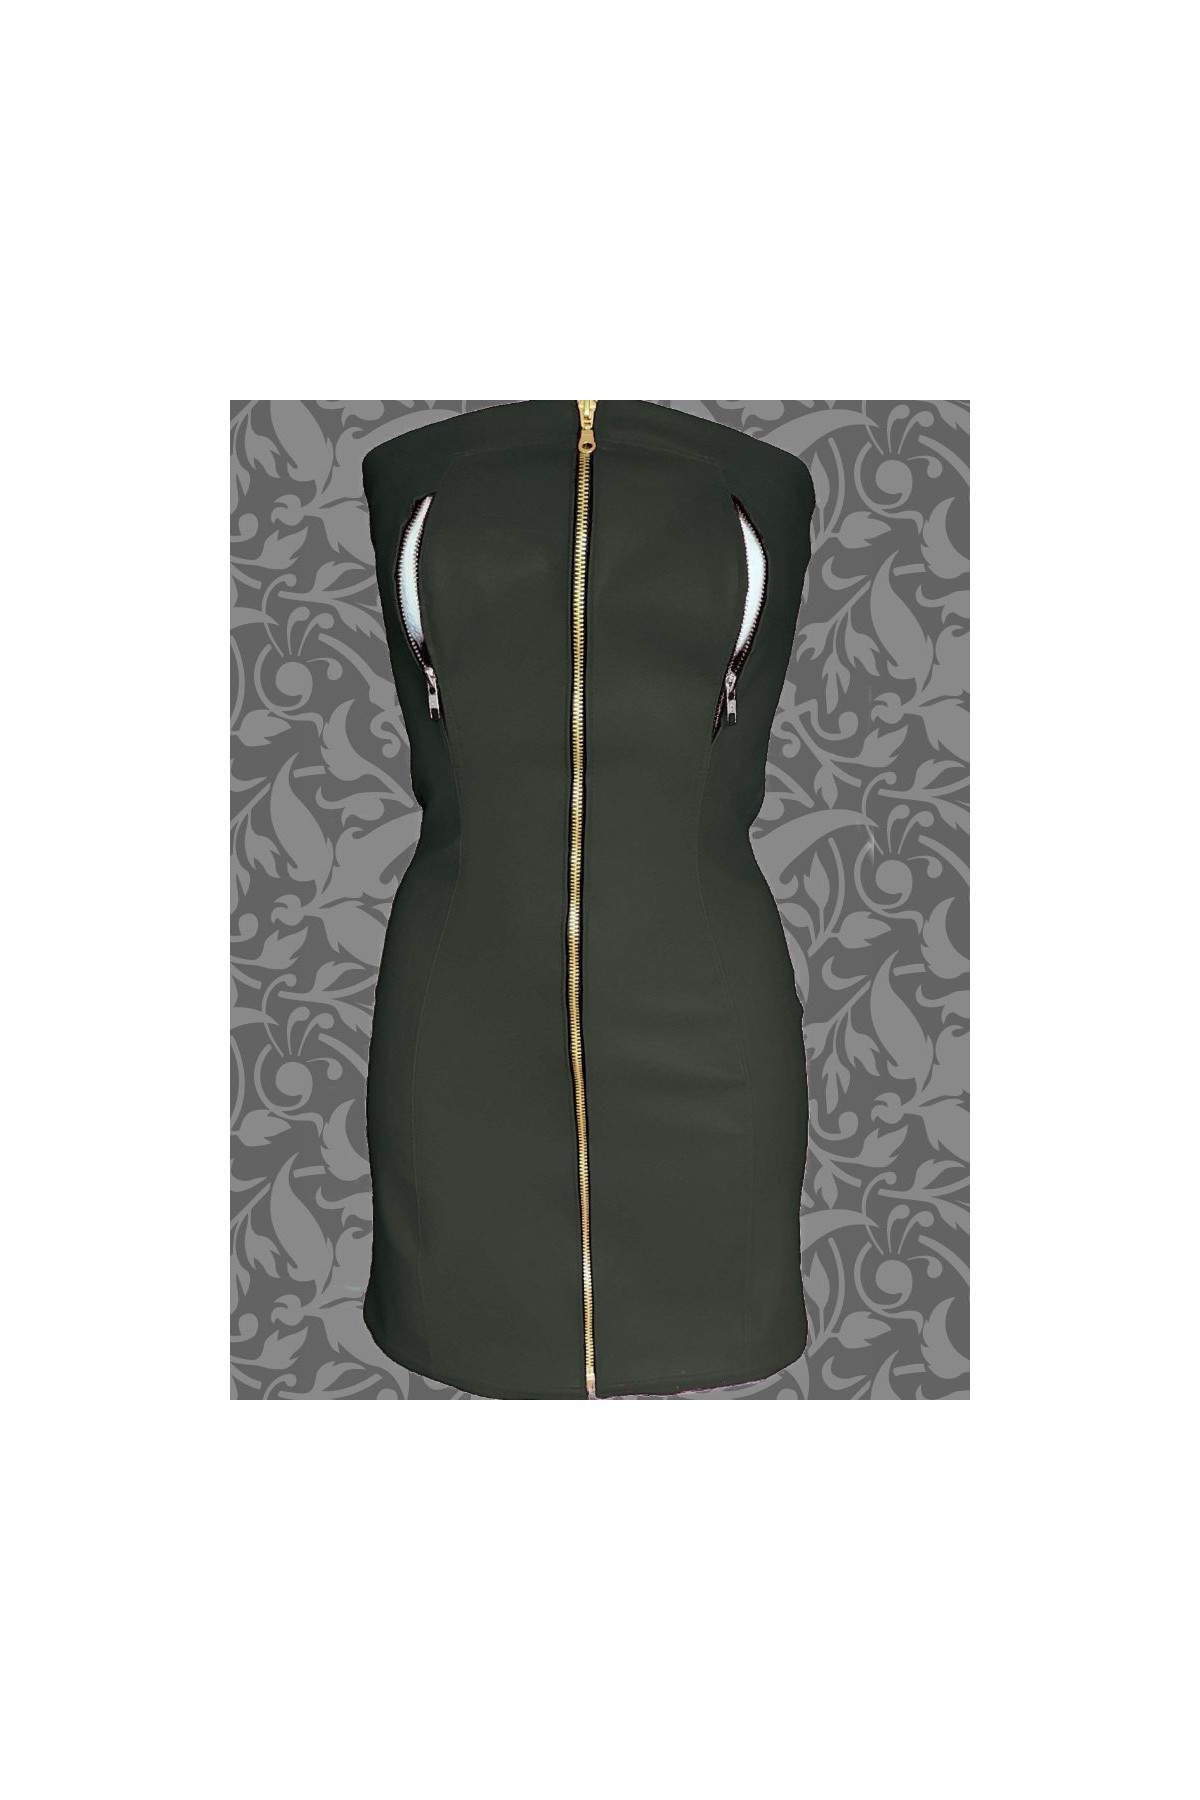 black week Save 15% Black leather dress nipple-free with zippers - 